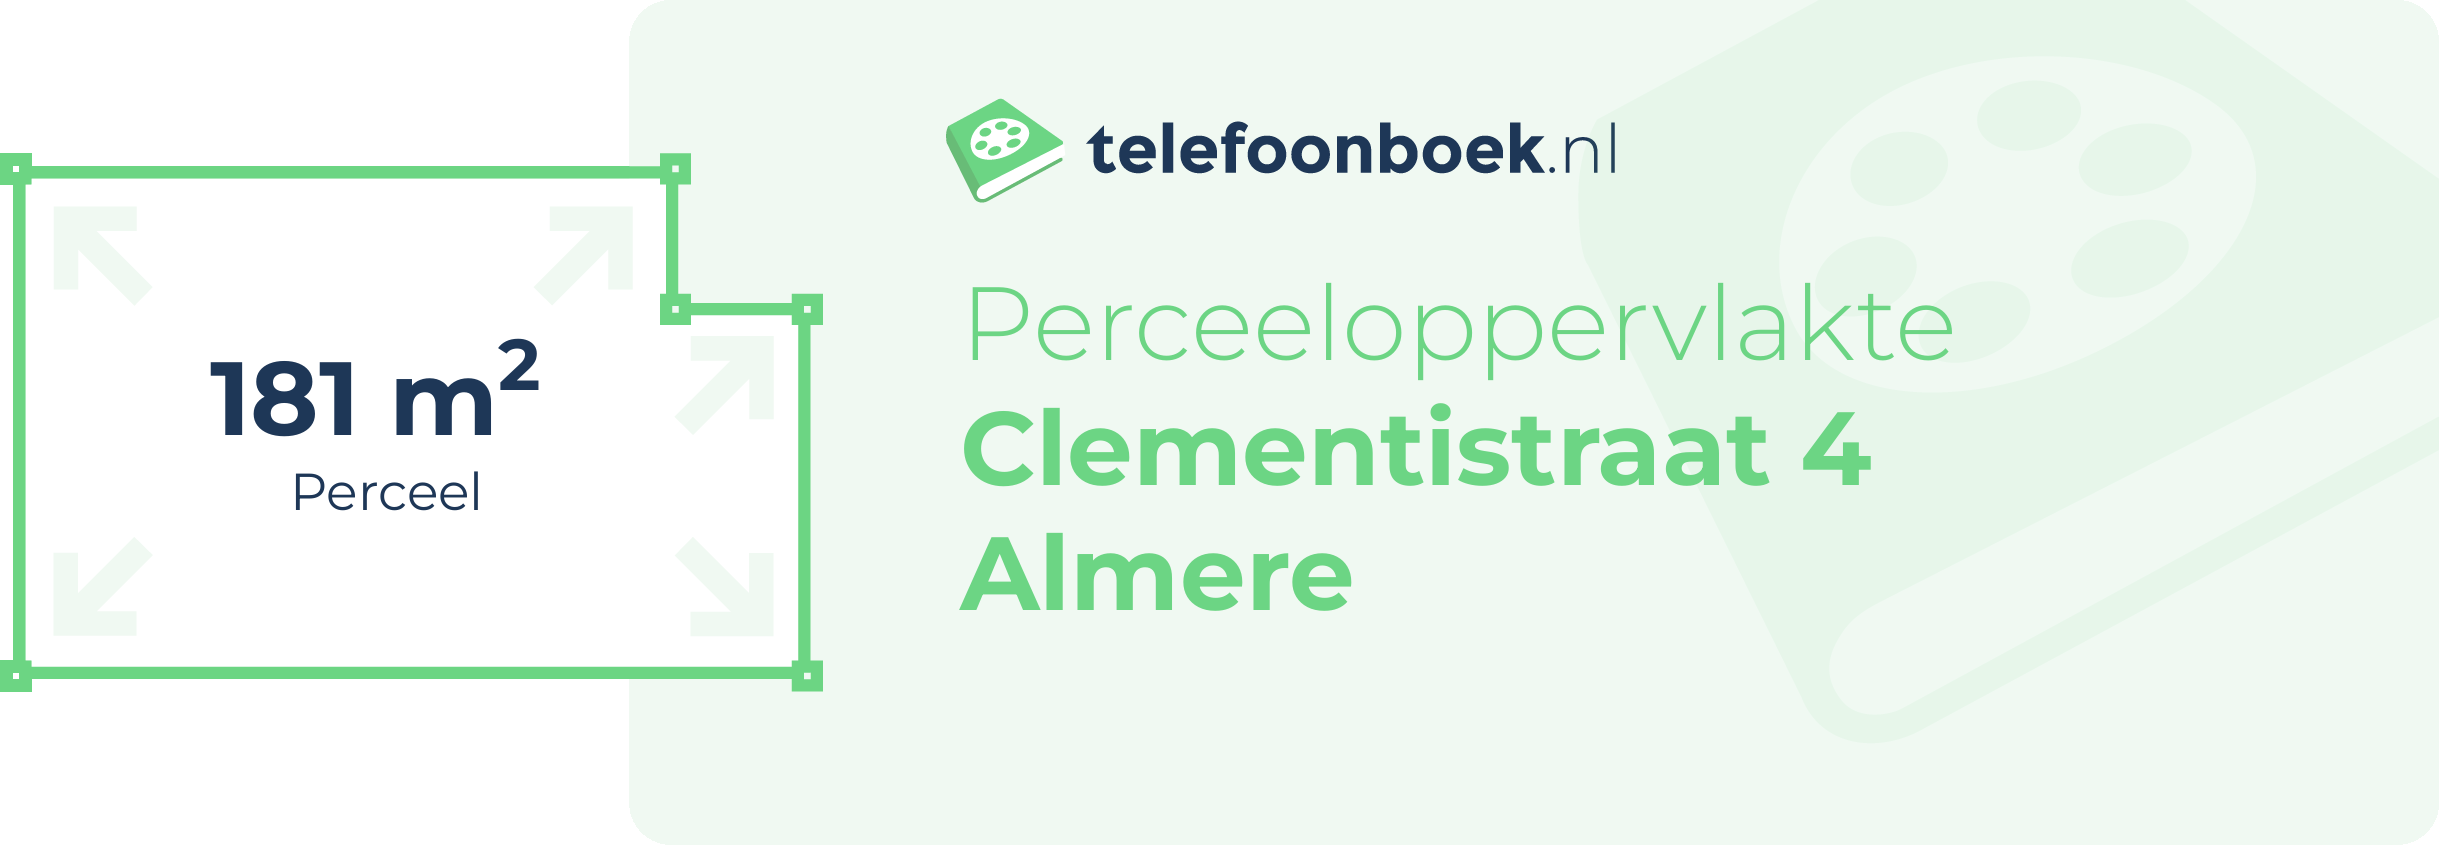 Perceeloppervlakte Clementistraat 4 Almere